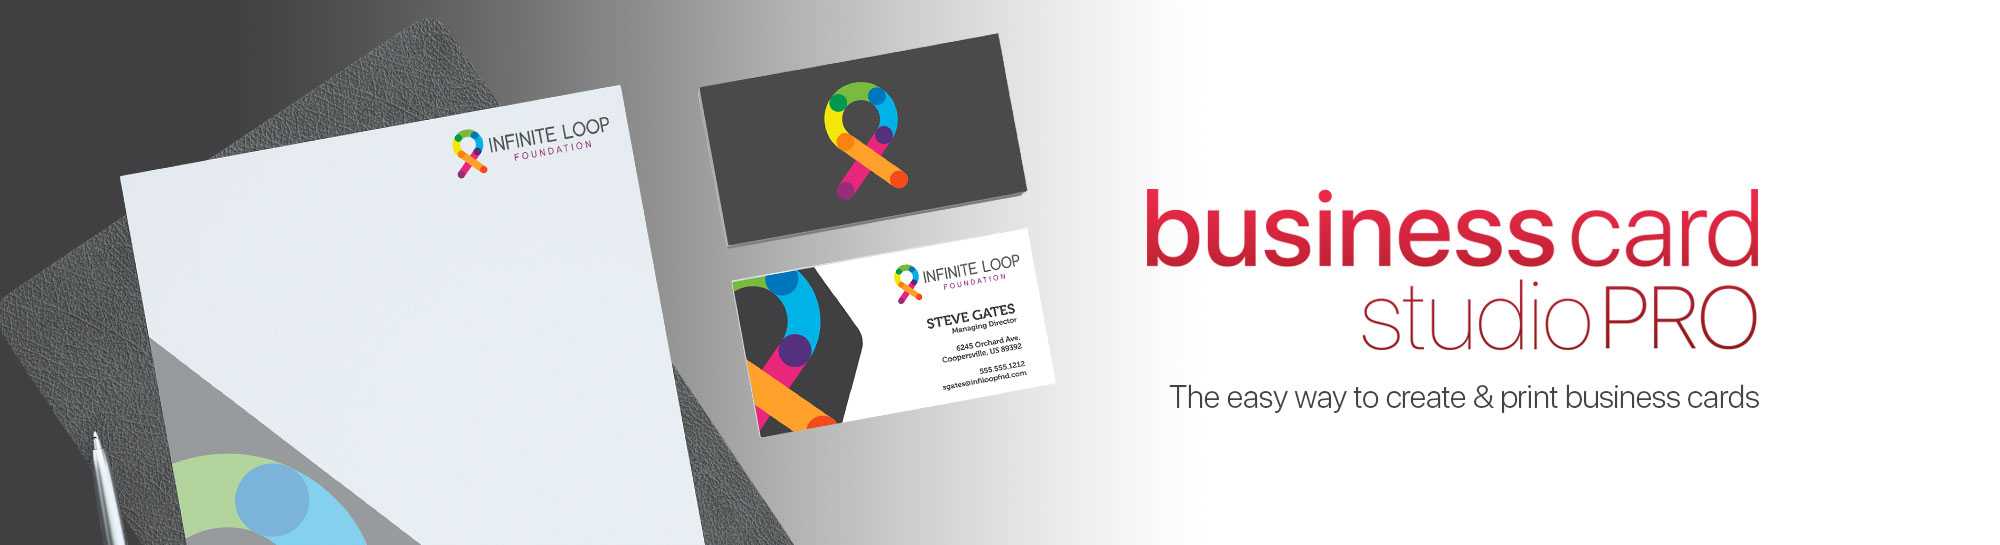 Business Card Studio Pro Softwaresummitsoft Regarding Kinkos Business Card Template